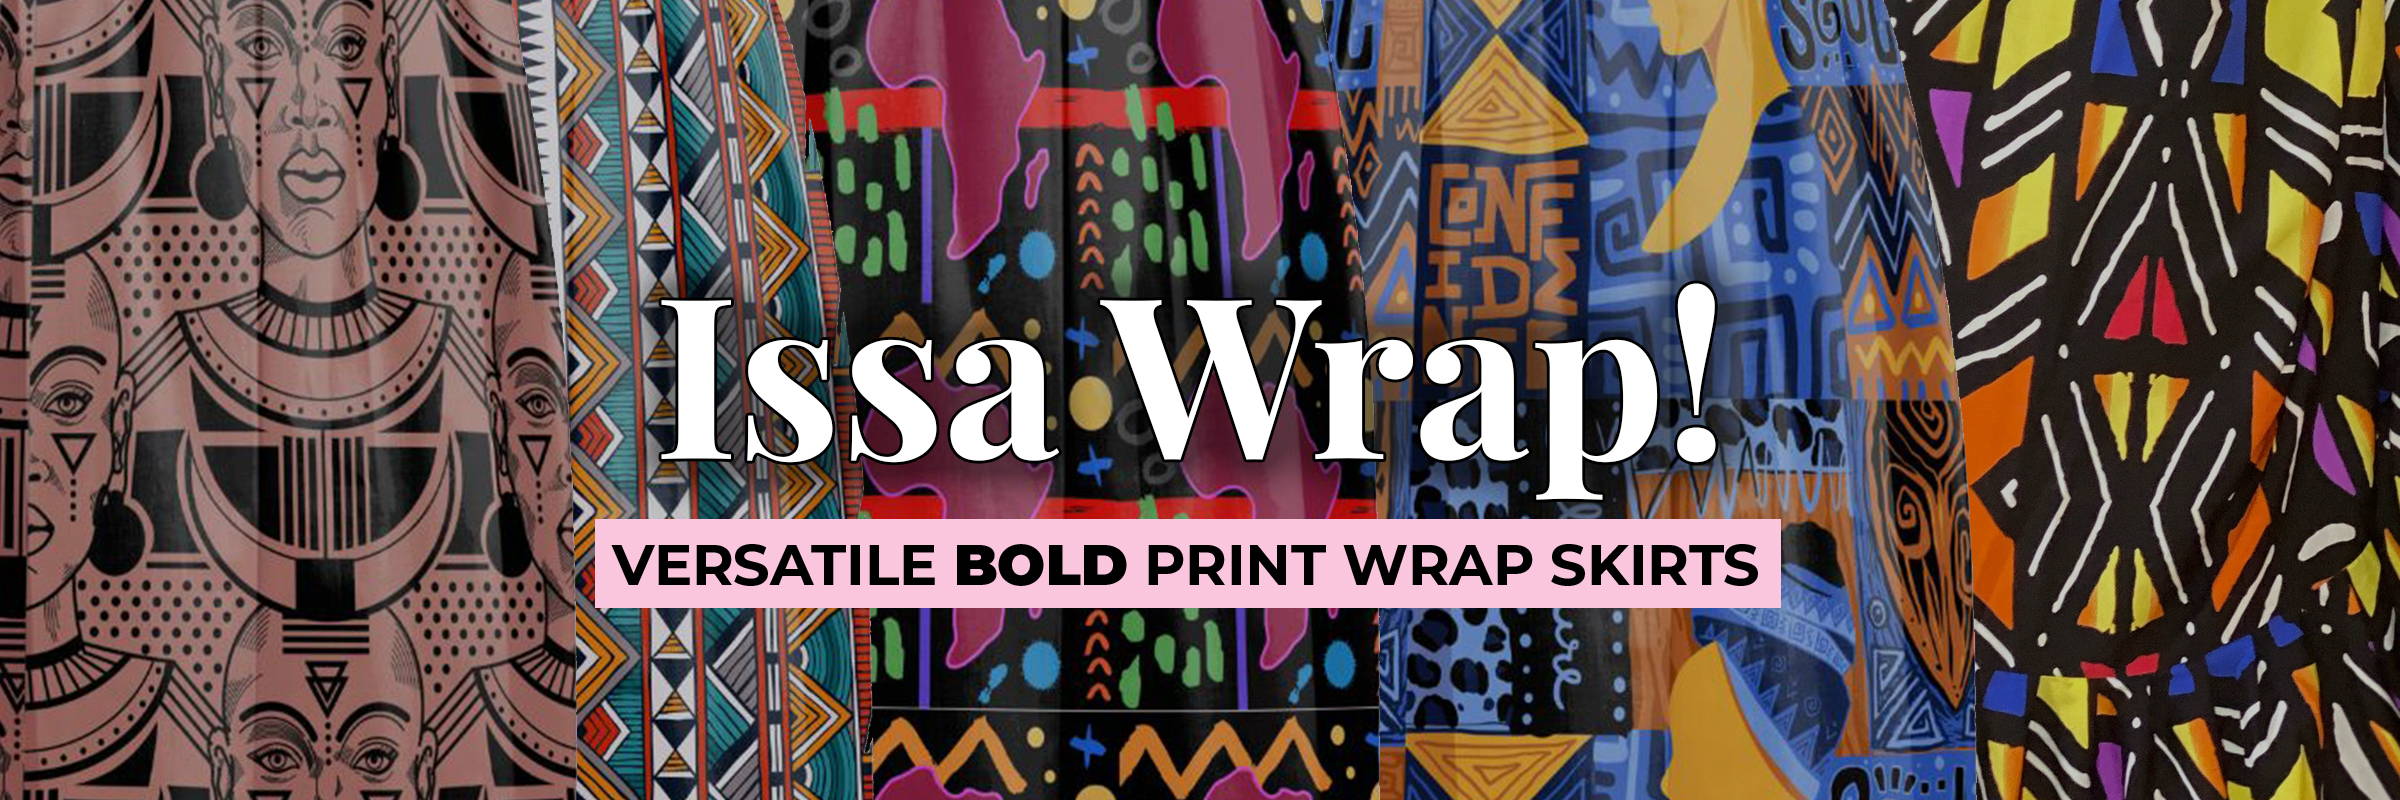 Issa Wrap! Versatile Bold Print Wrap Skirts